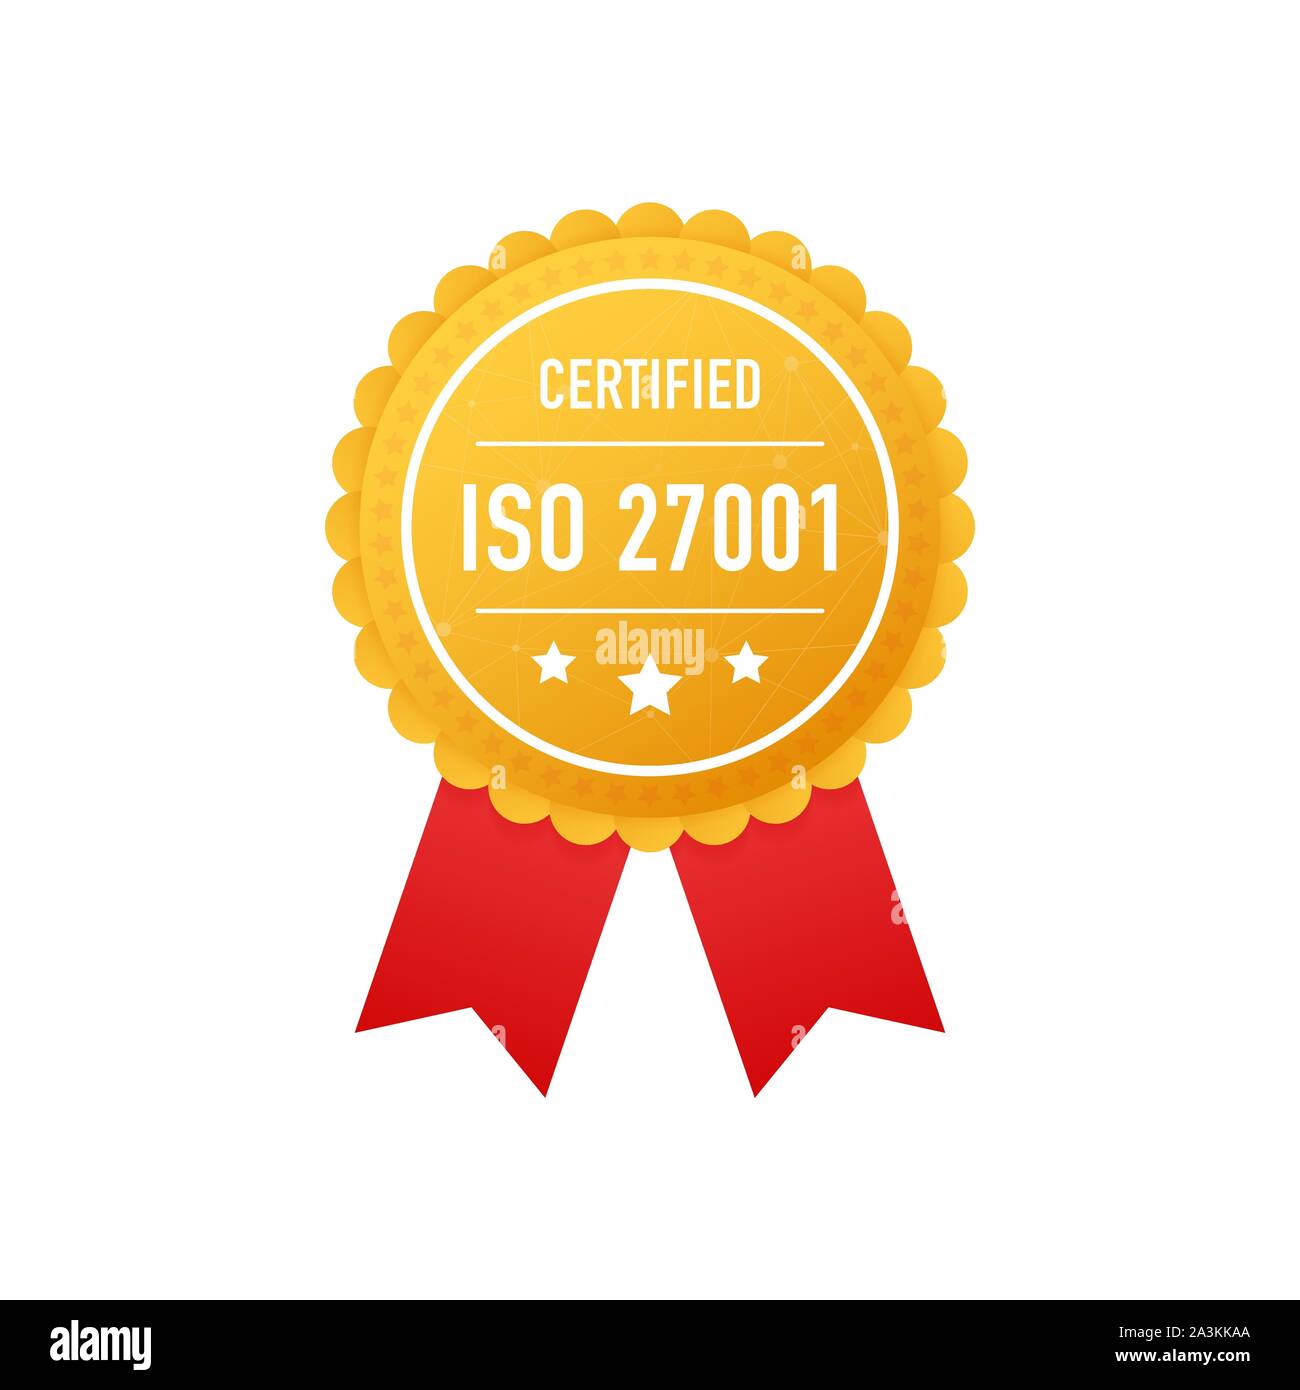 ISO 27001 certified golden label on white background. Vector stock illustration. Stock Vector